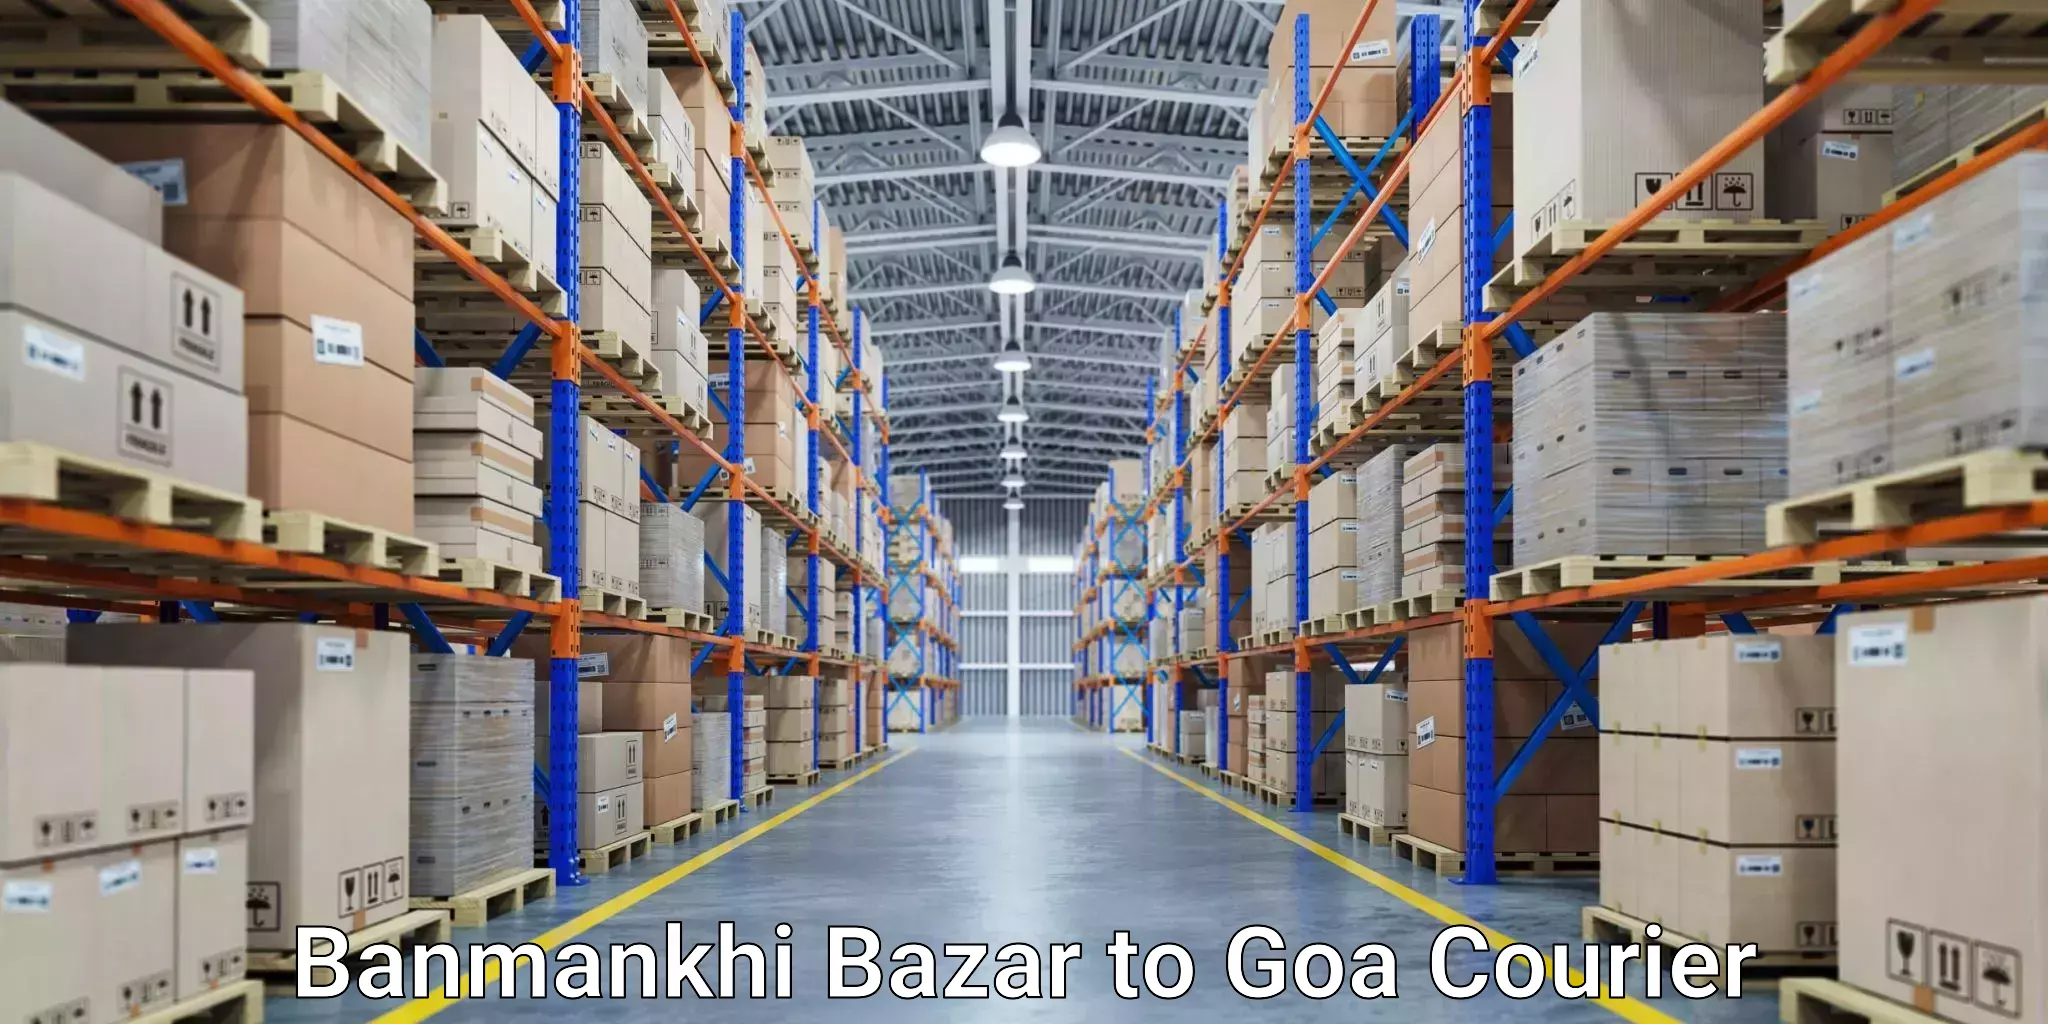 Express delivery network Banmankhi Bazar to Goa